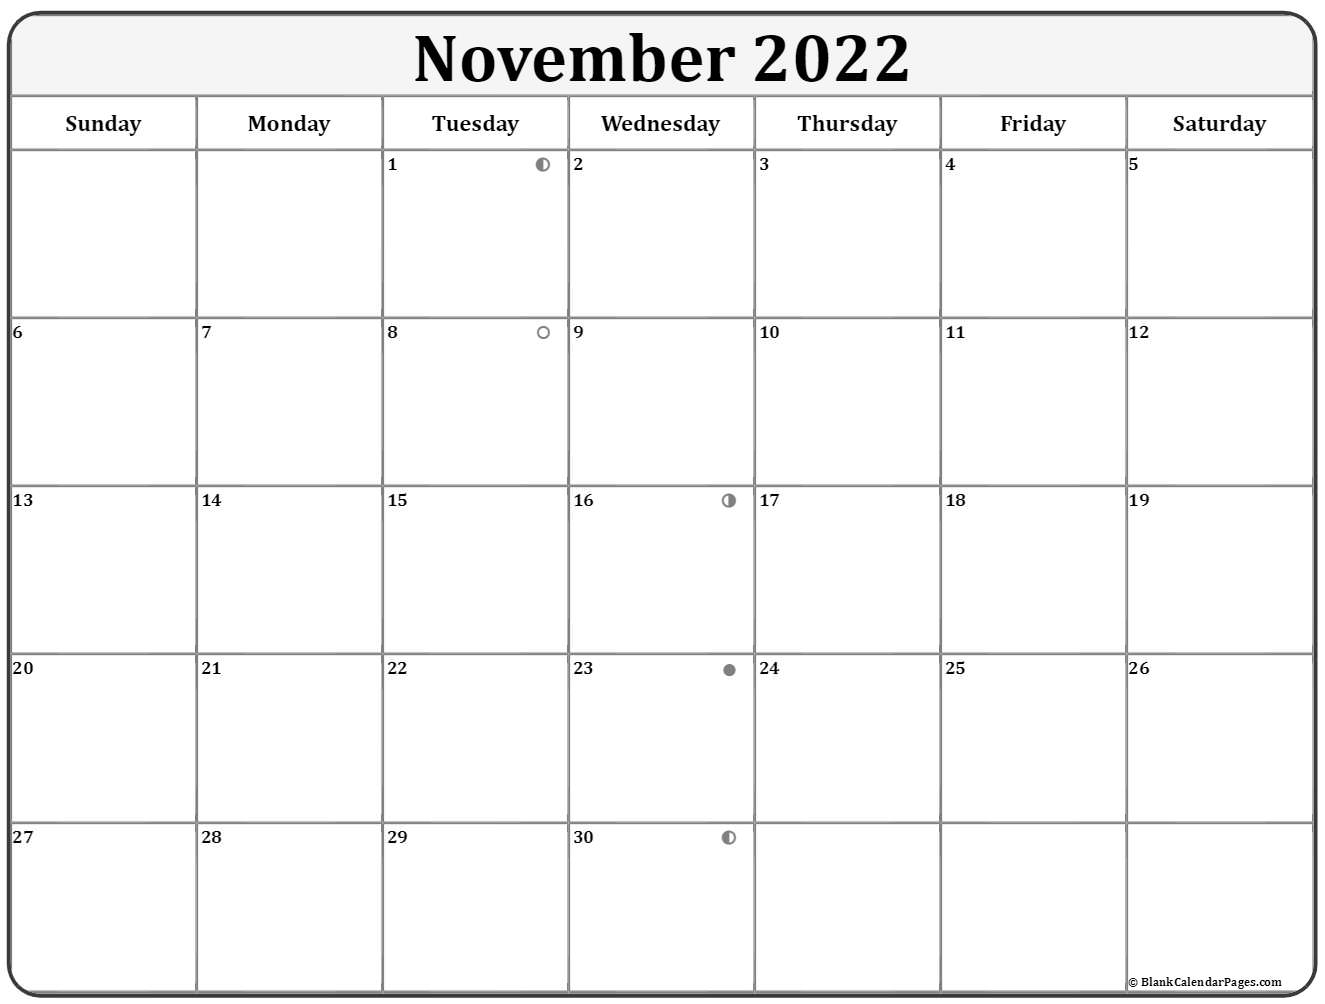 Sun Bowl Stadium Novembr 2022 Calendar September 2022 